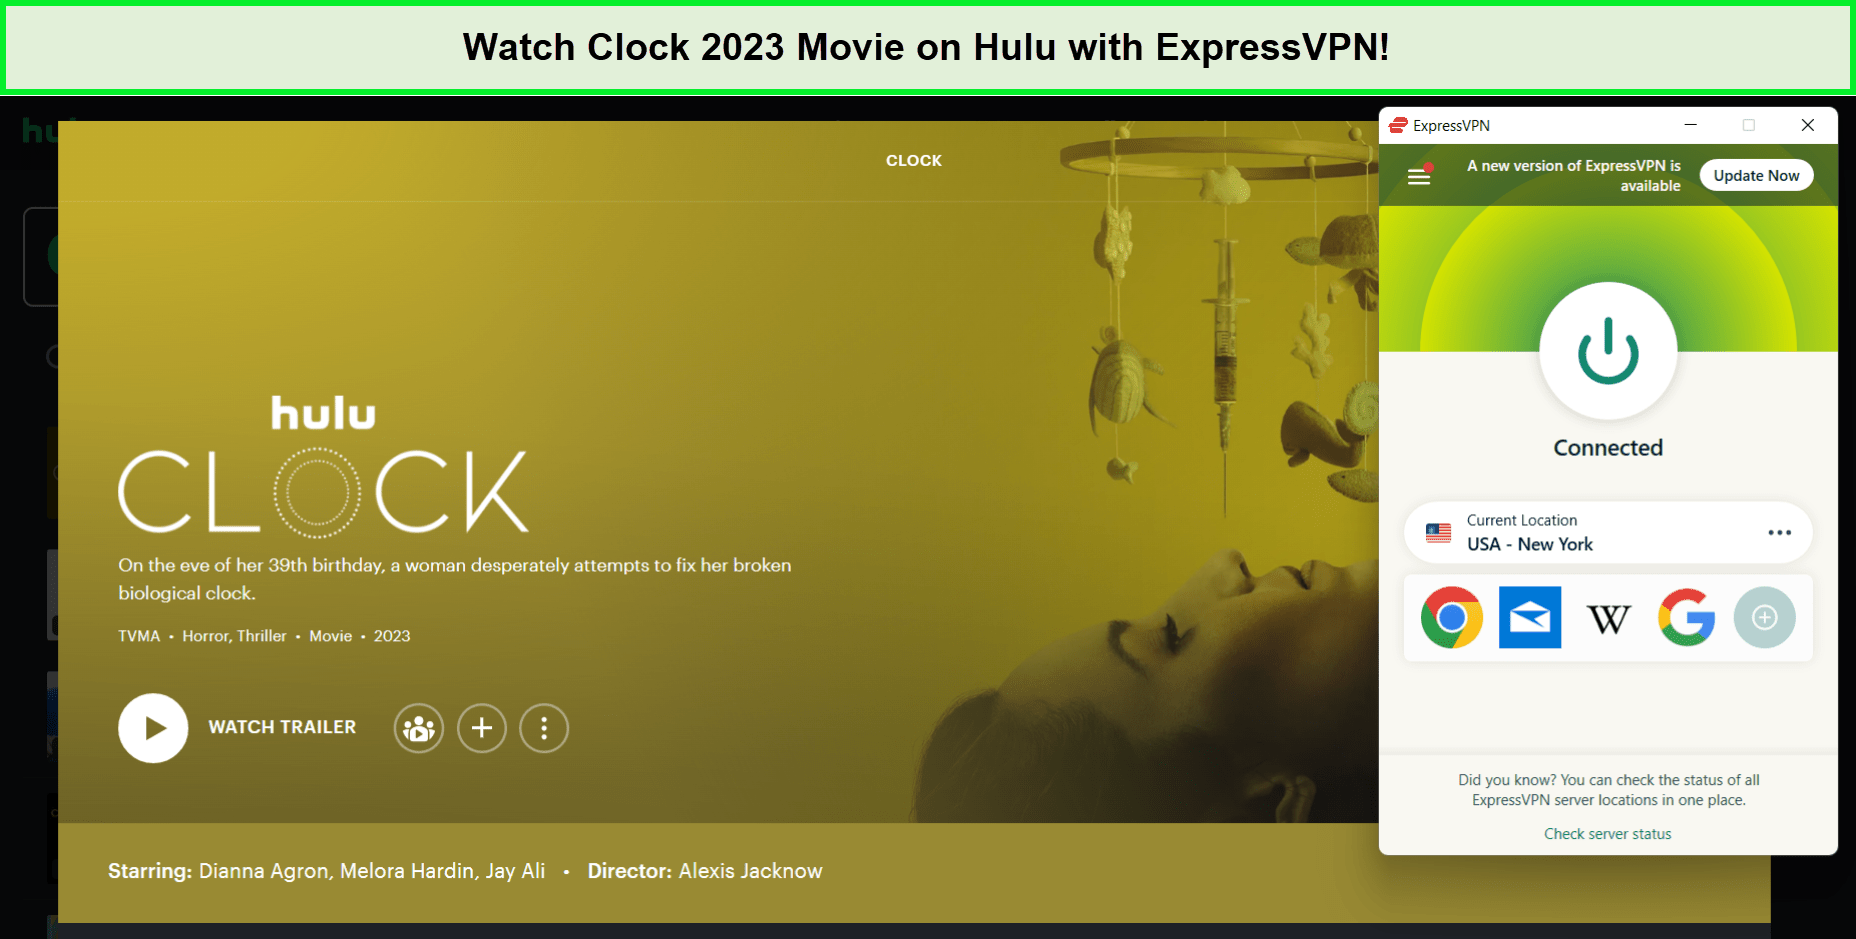 With-ExpressVPN-Watch-Clock-2023-Movie-on-Hulu-in-Canada